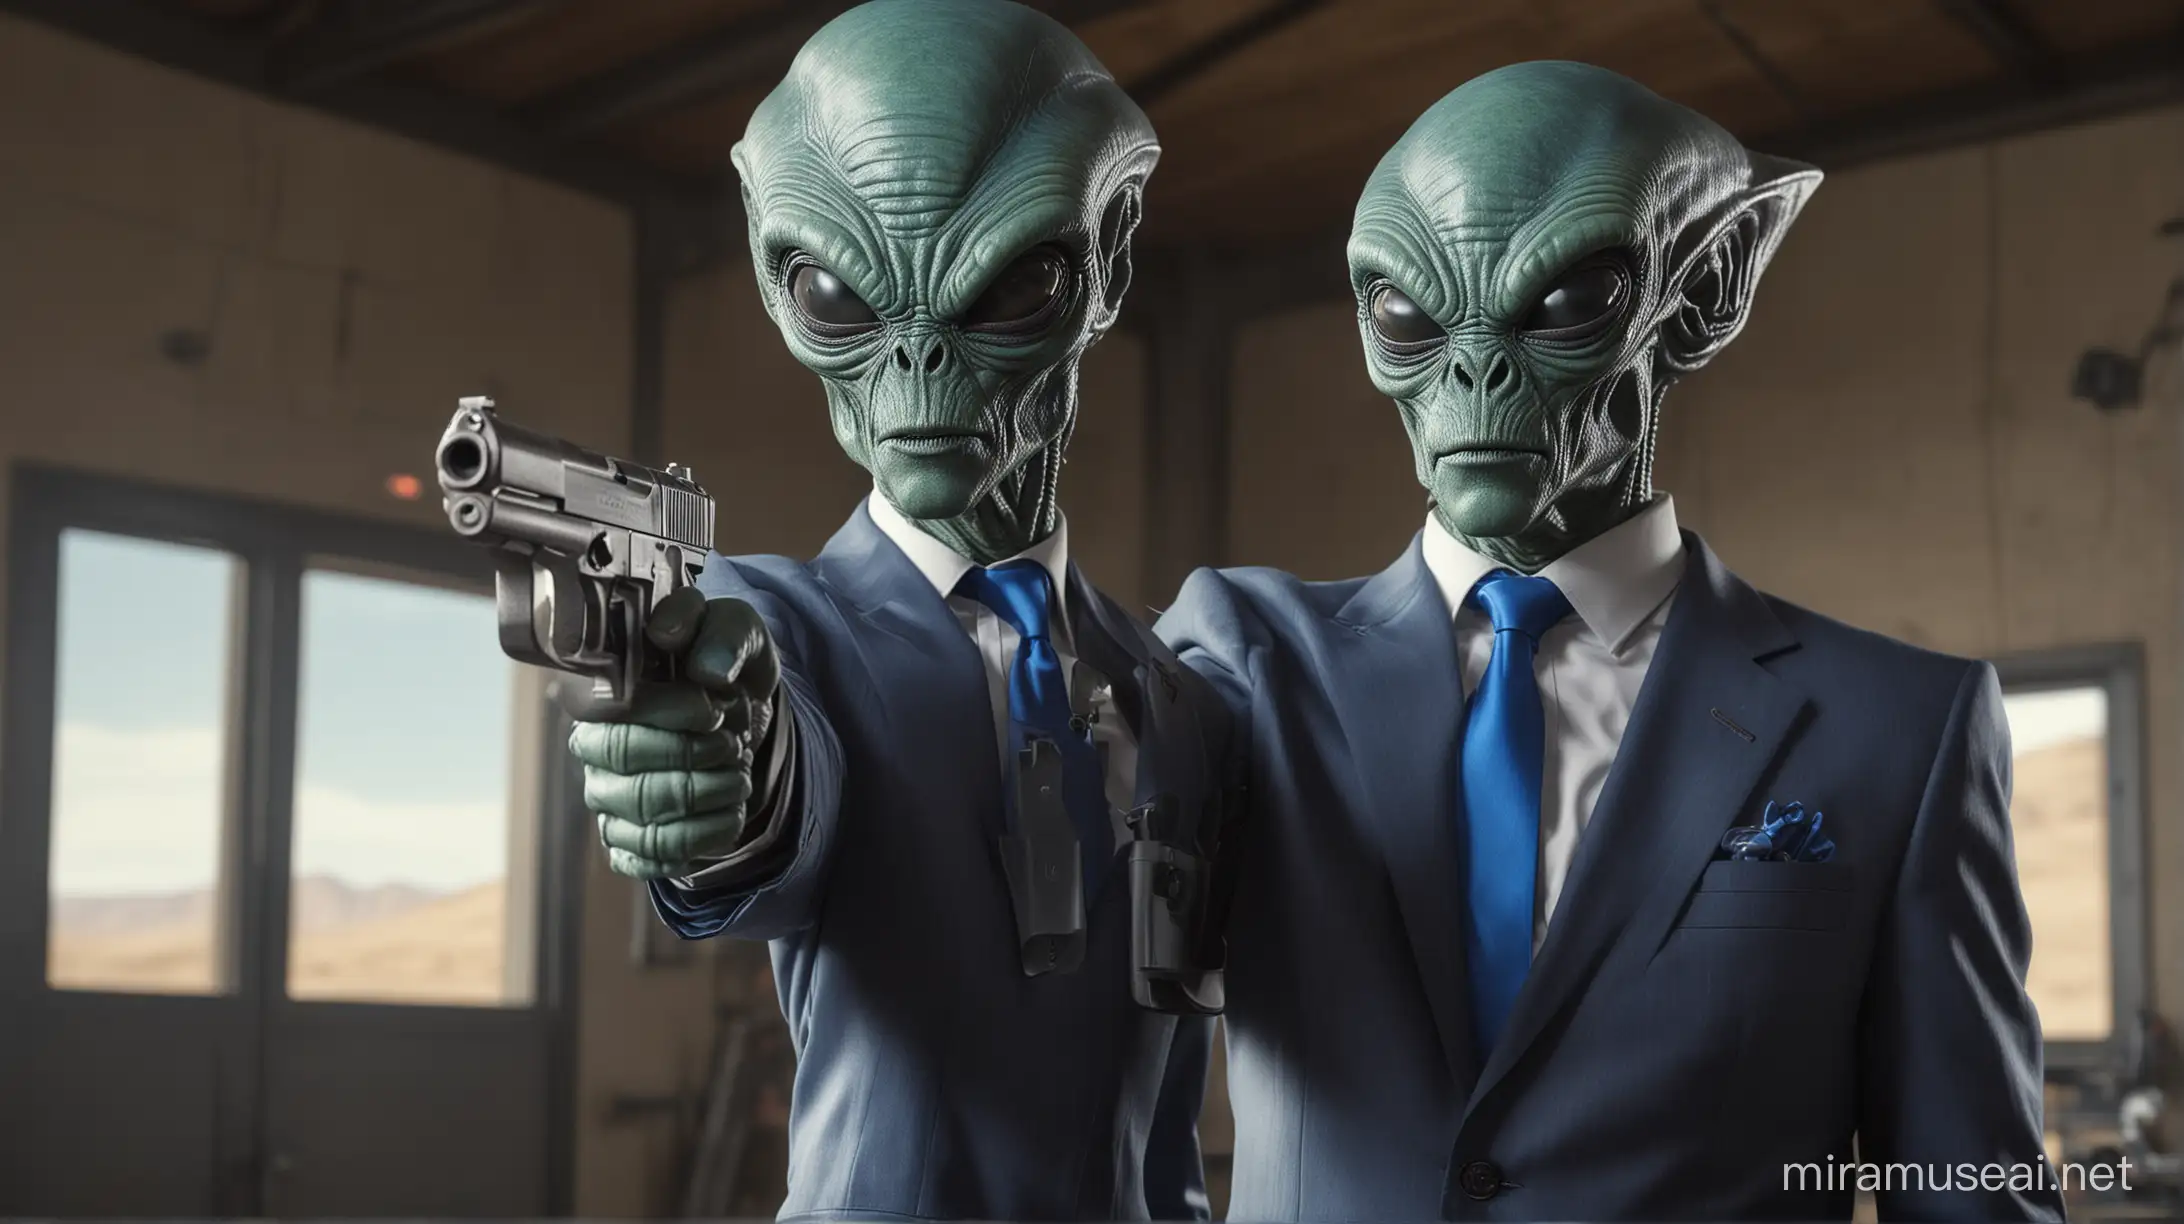 Alien Sharpshooter Extraterrestrial in Business Attire Practicing Marksmanship